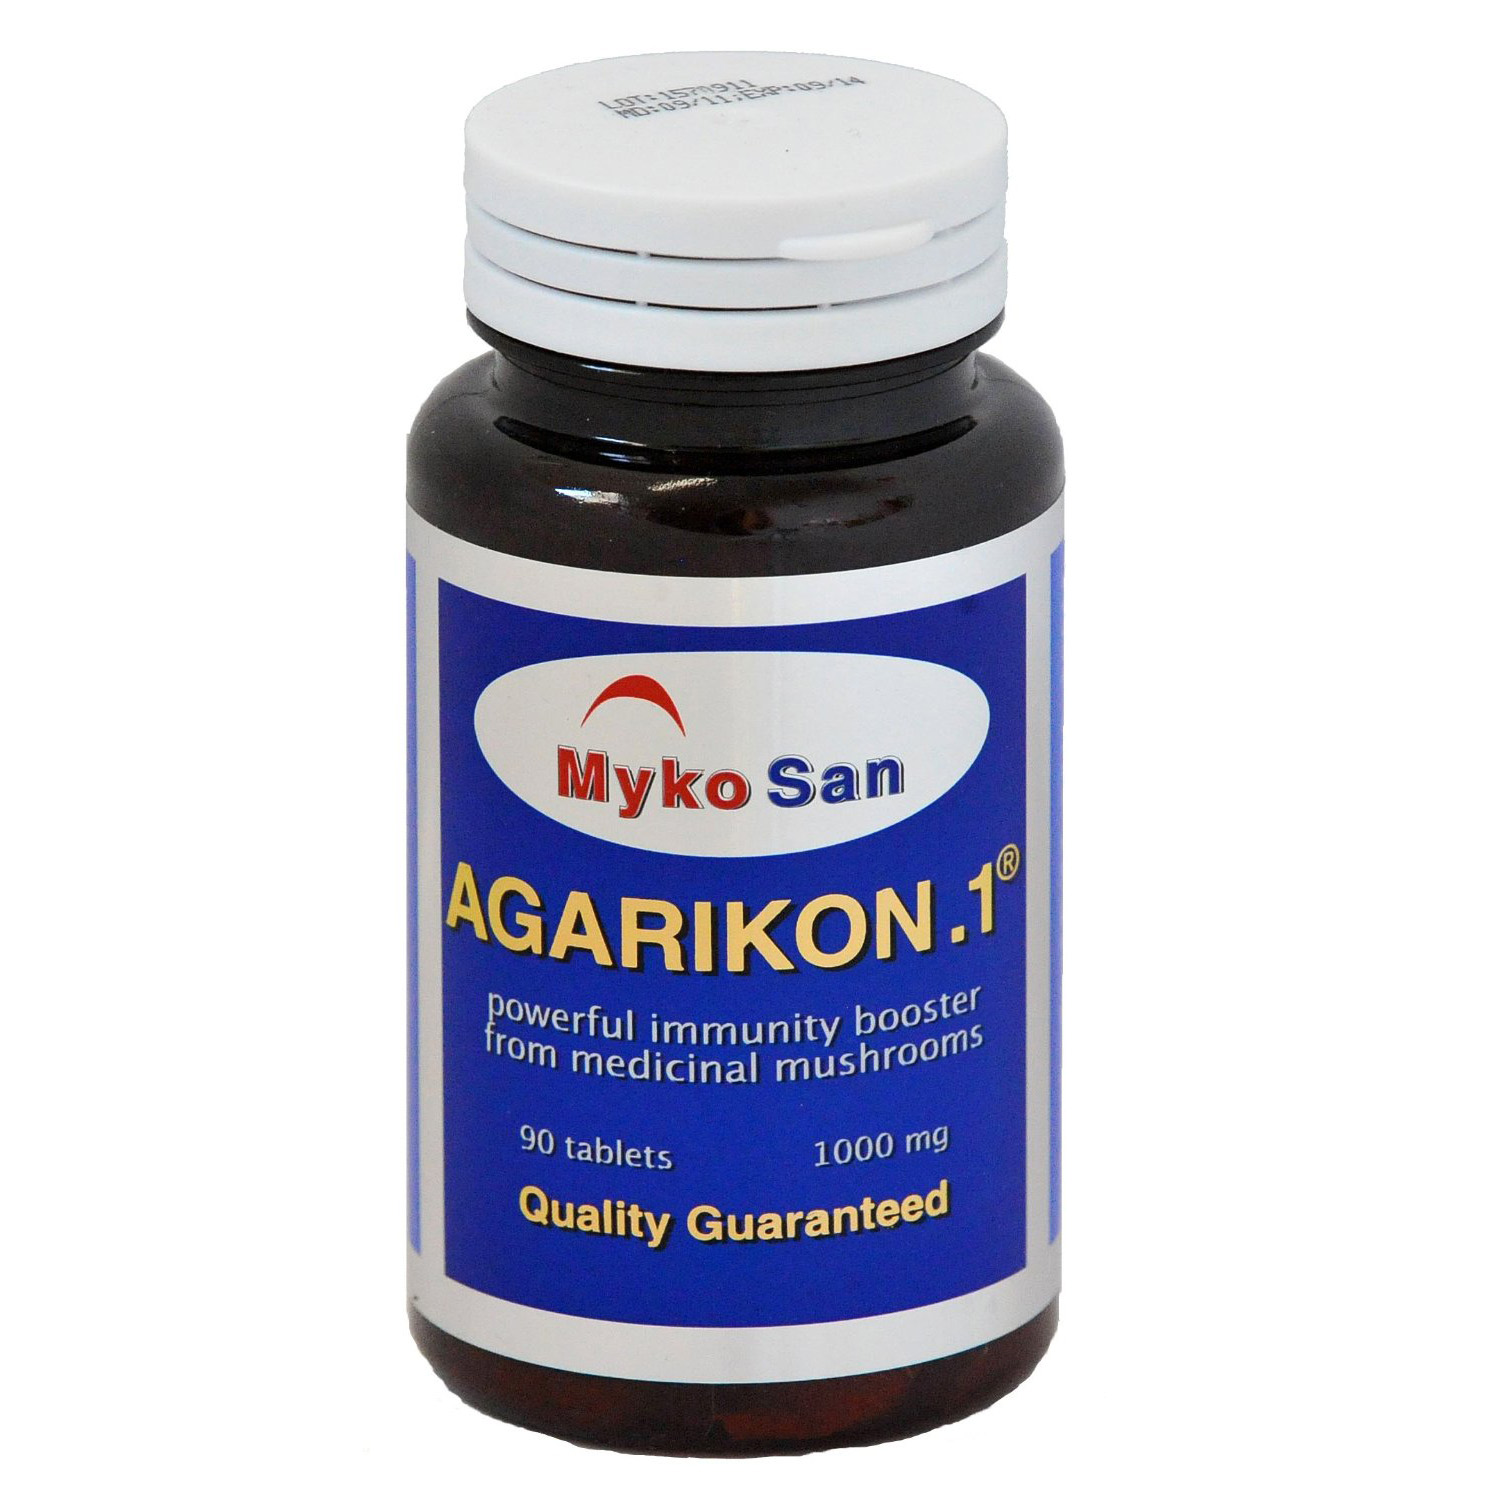 Agarikon.1 medicinal mushroom extract for cancer patients